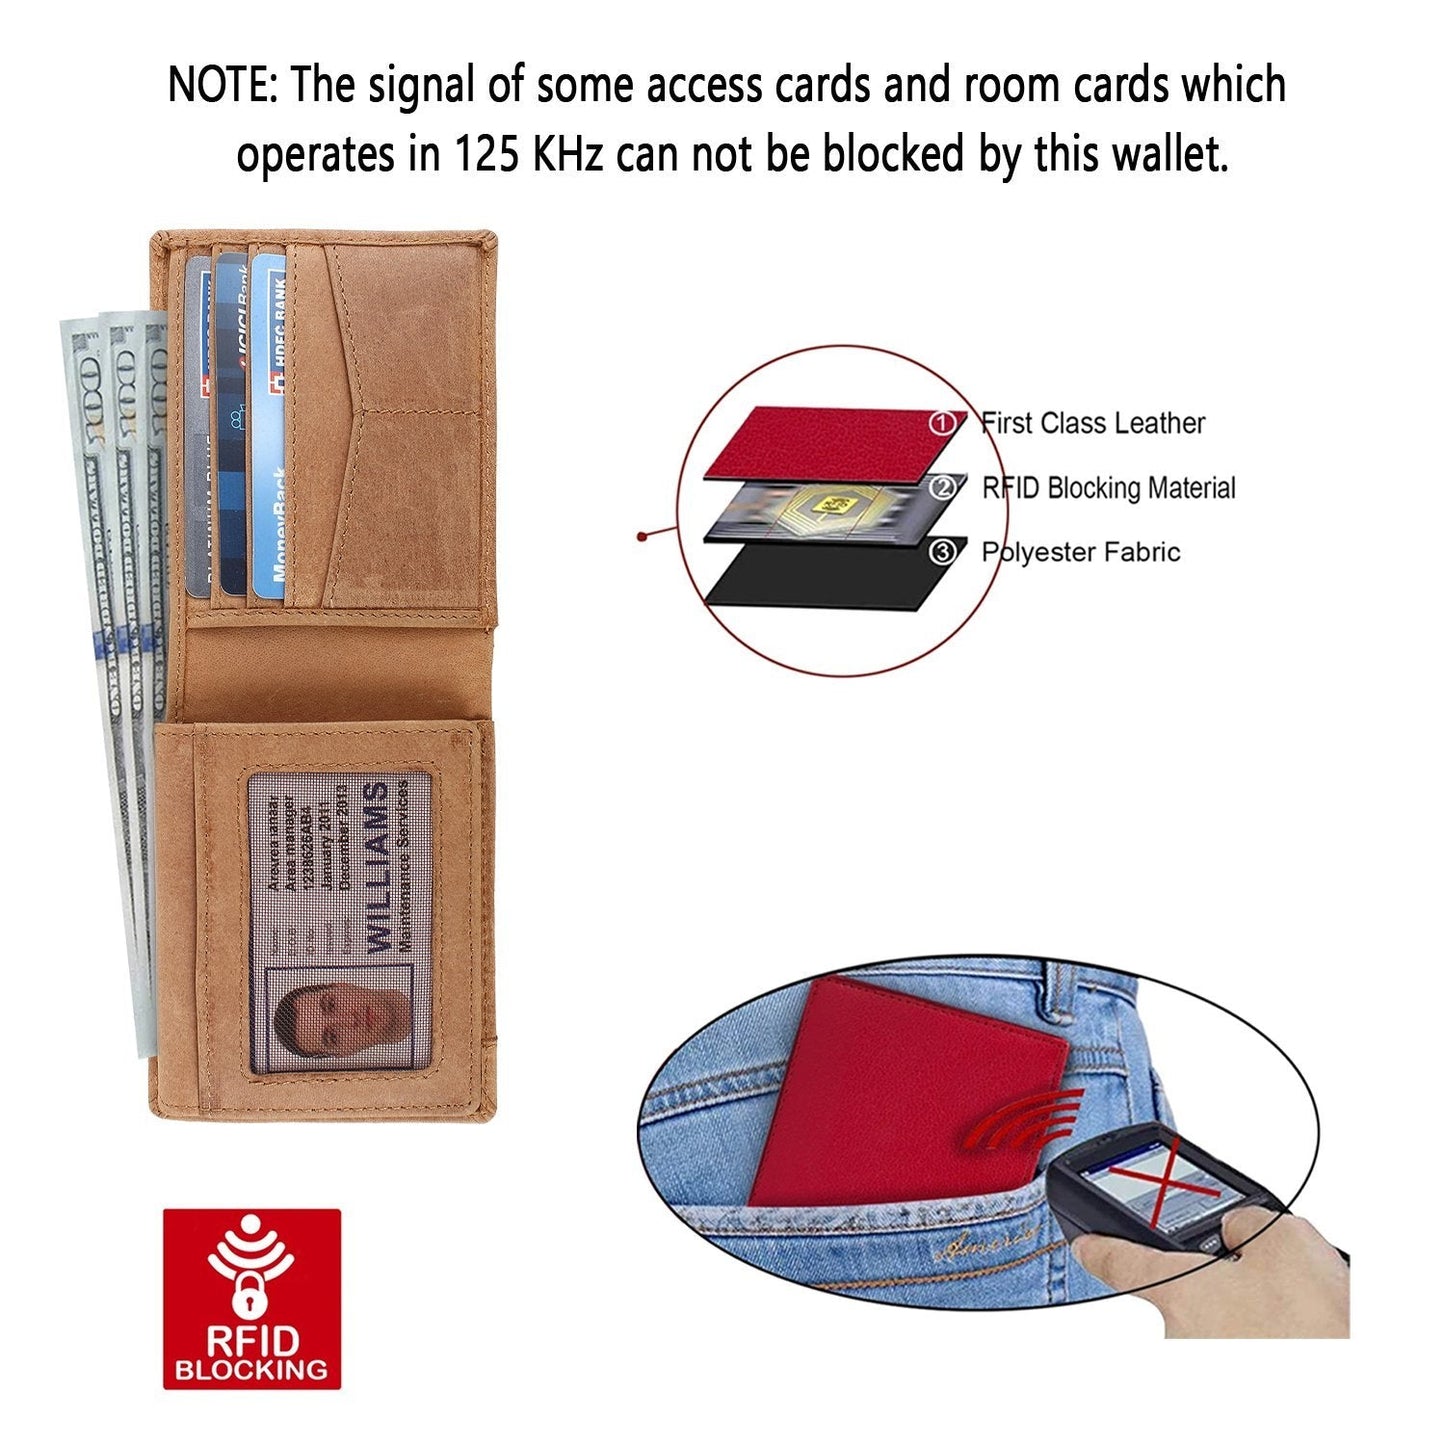 Tan Colour Bi-Fold Italian Leather Slim Wallet (8 Card Slot + 2 Hidden Compartment + 2 ID Slot + Cash Compartment )